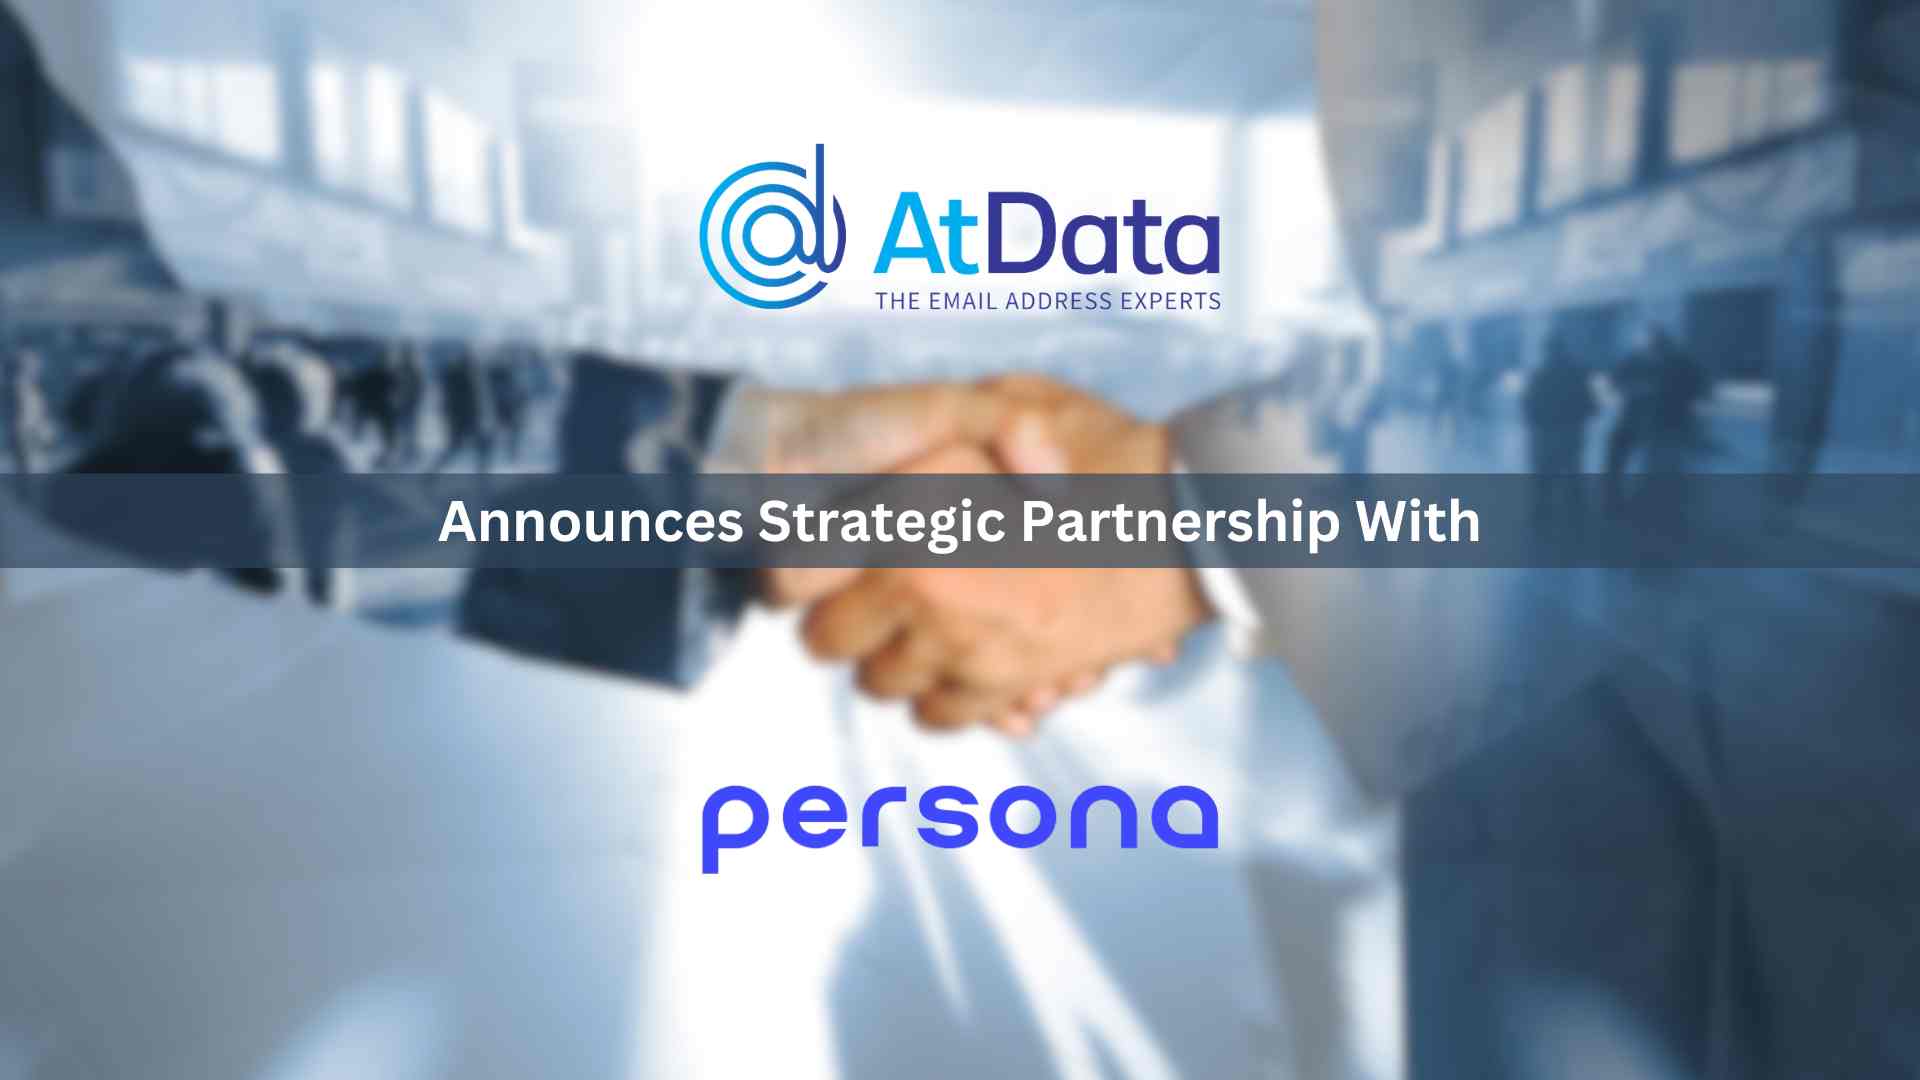 AtData Announces Strategic Partnership with Persona